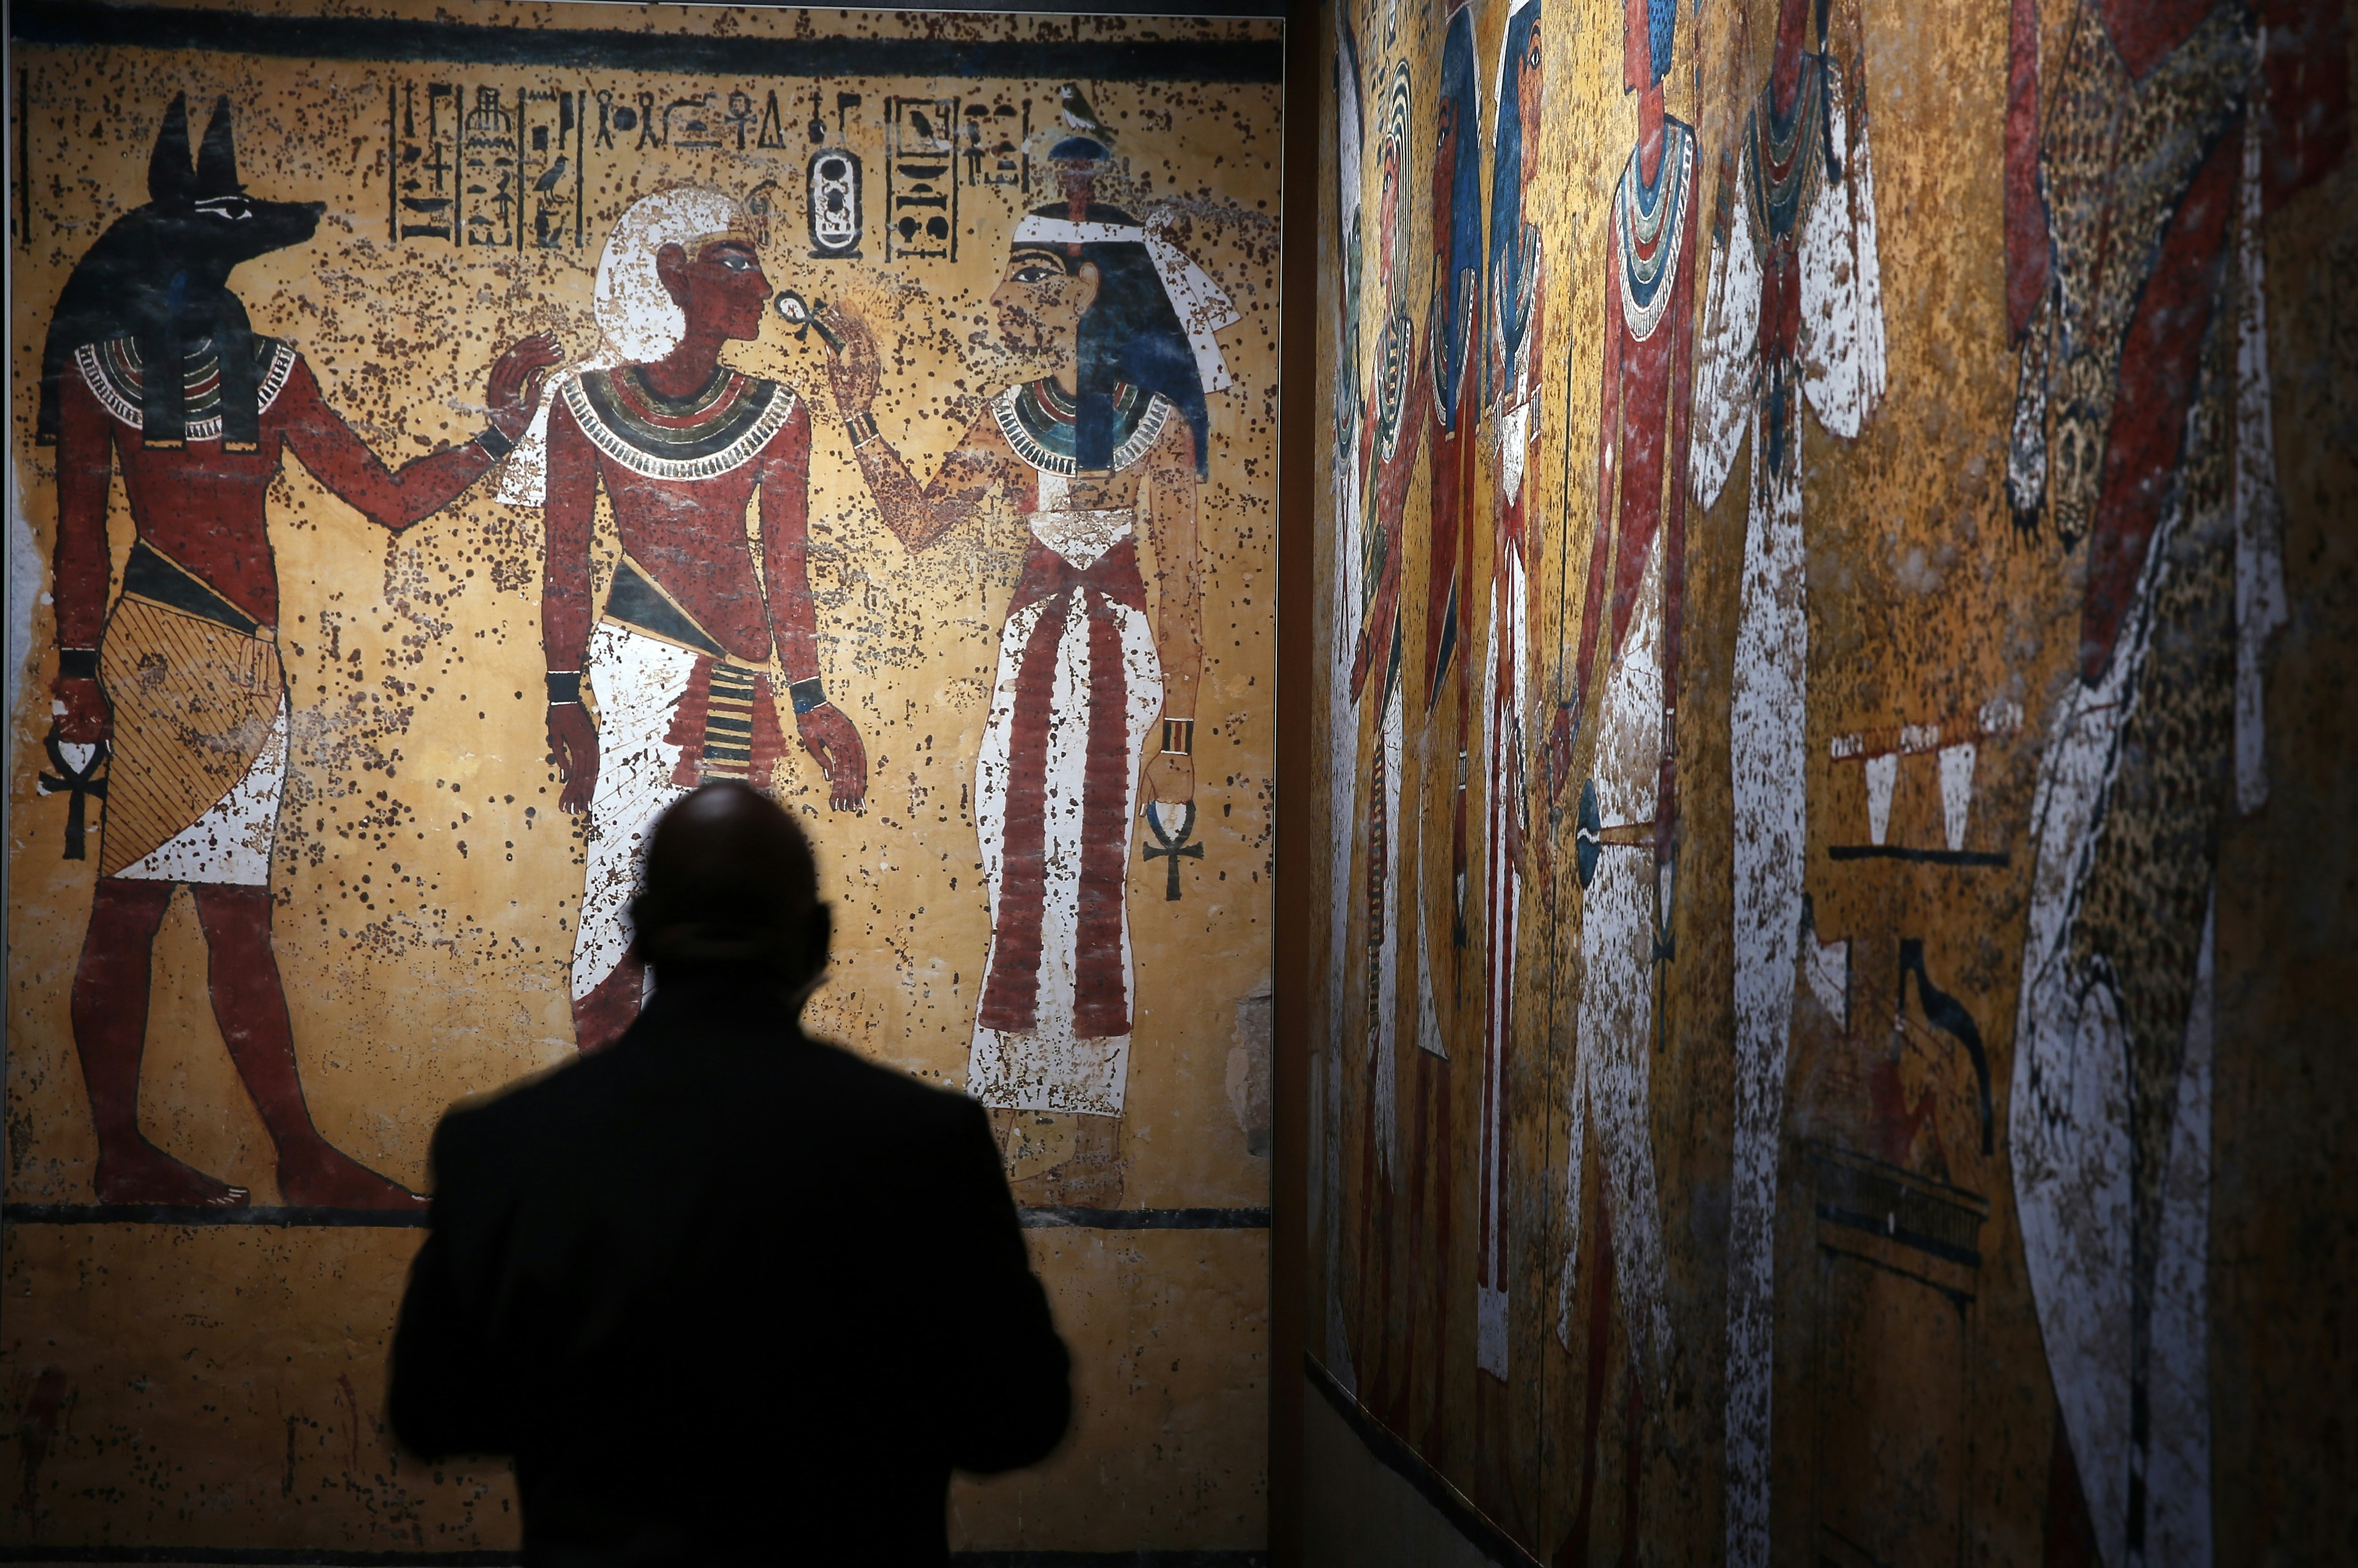 Egyptian frescos on exhibit in Paris